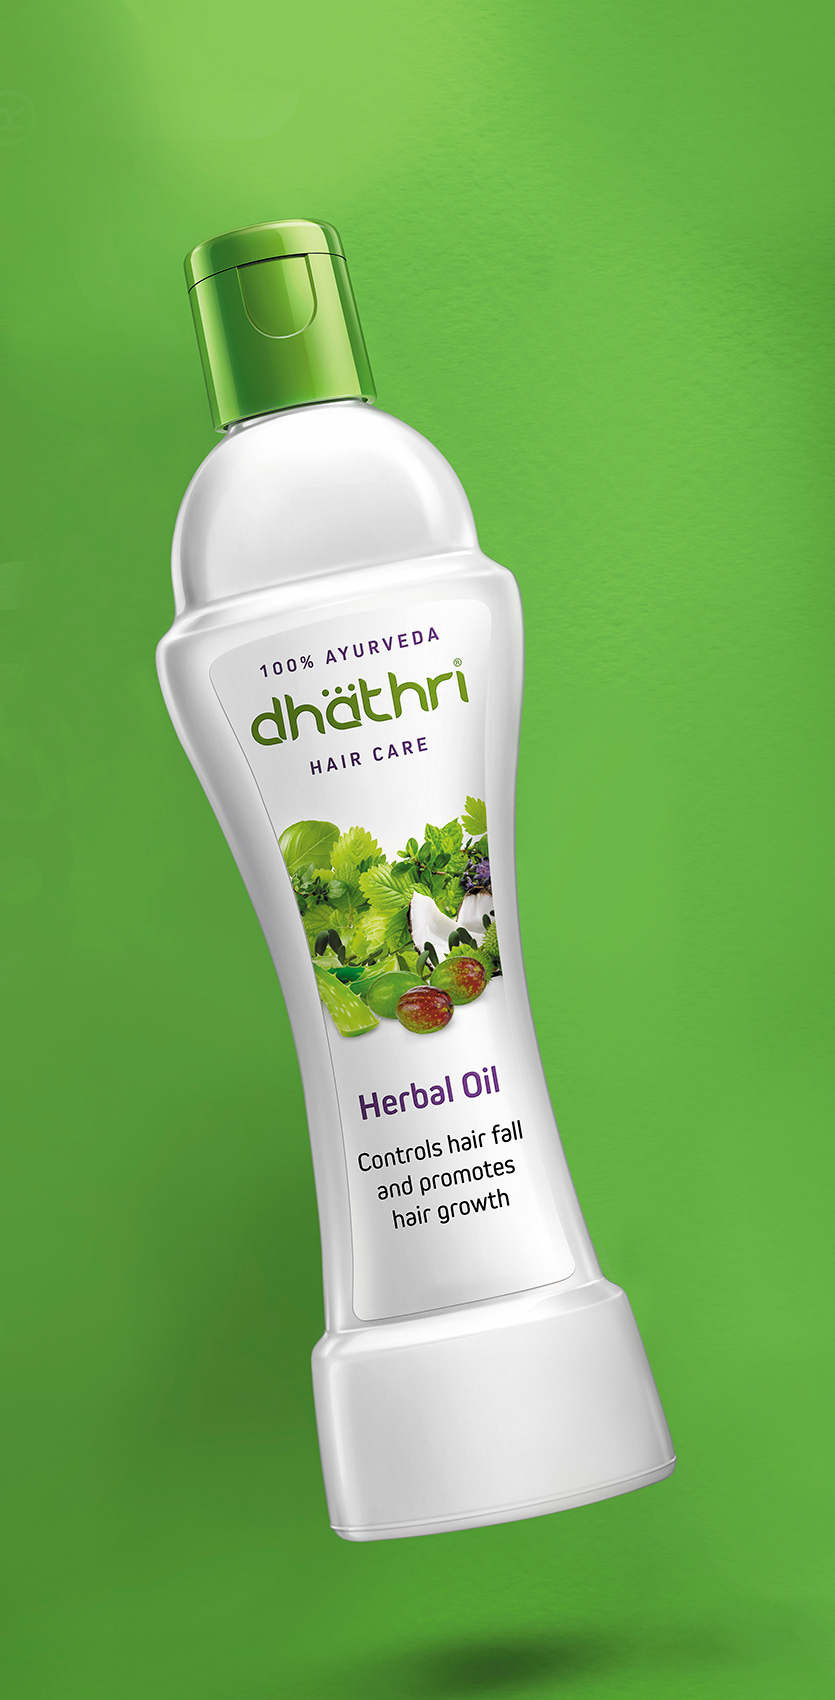 Dheedhi/Dhathri Hair Care on Behance